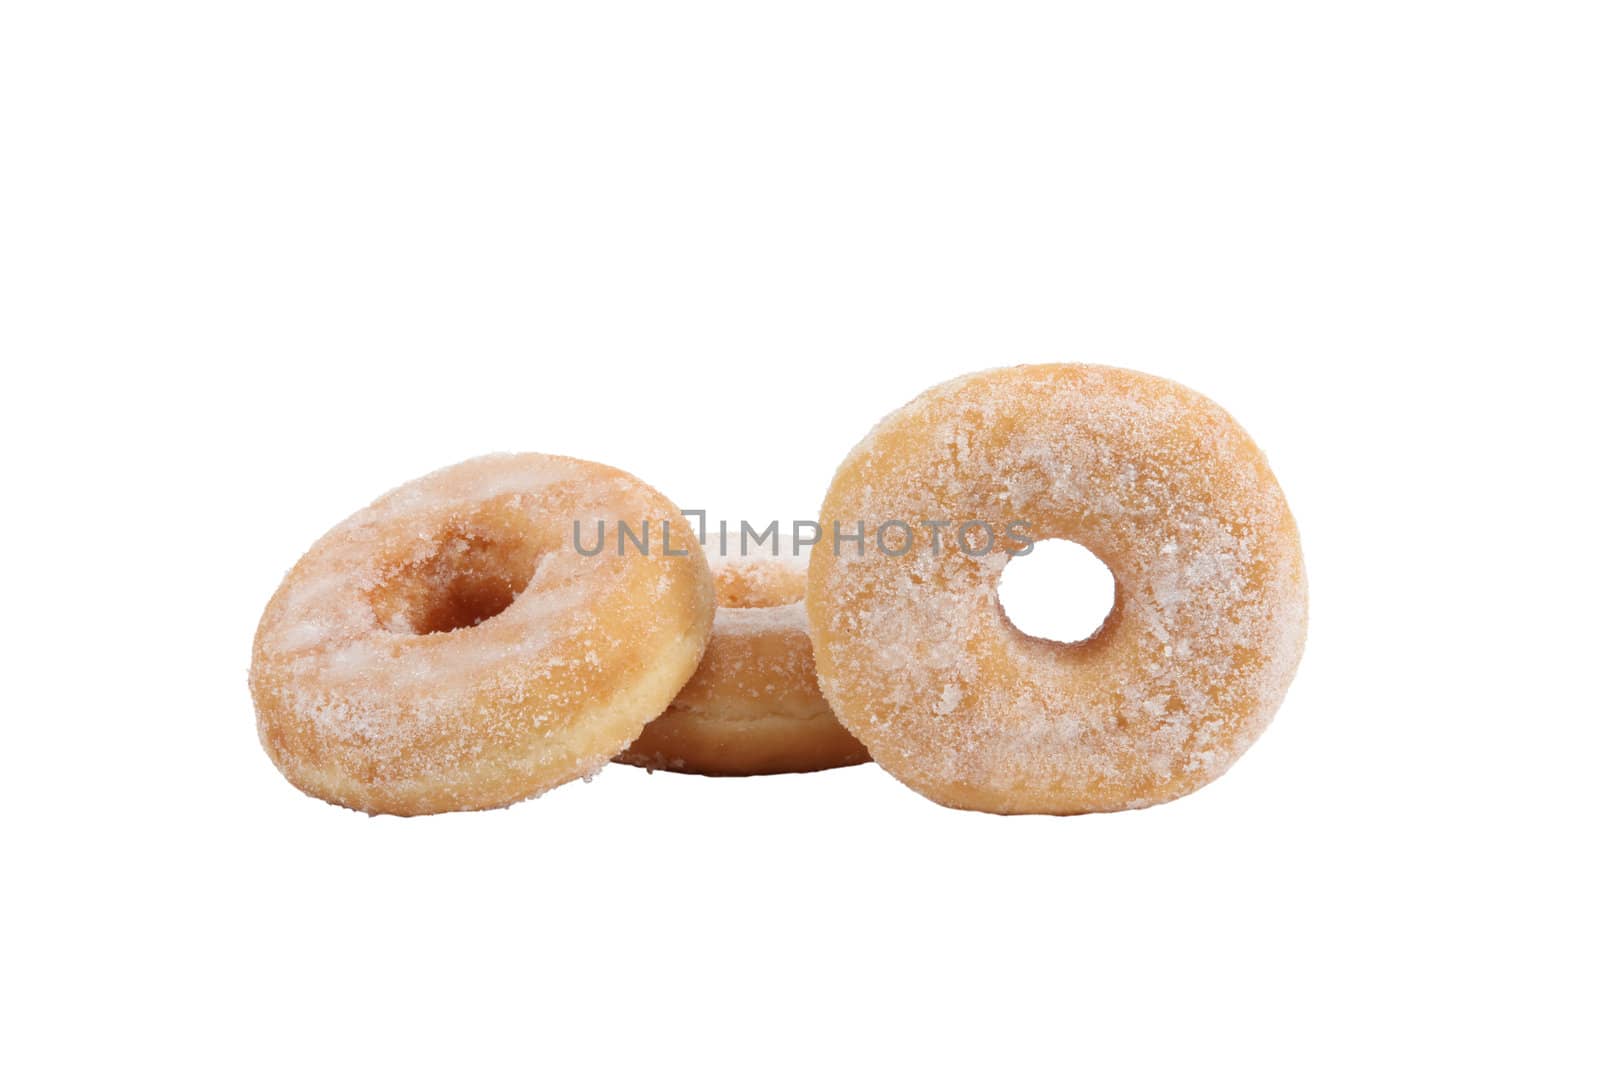 Ring doughnuts